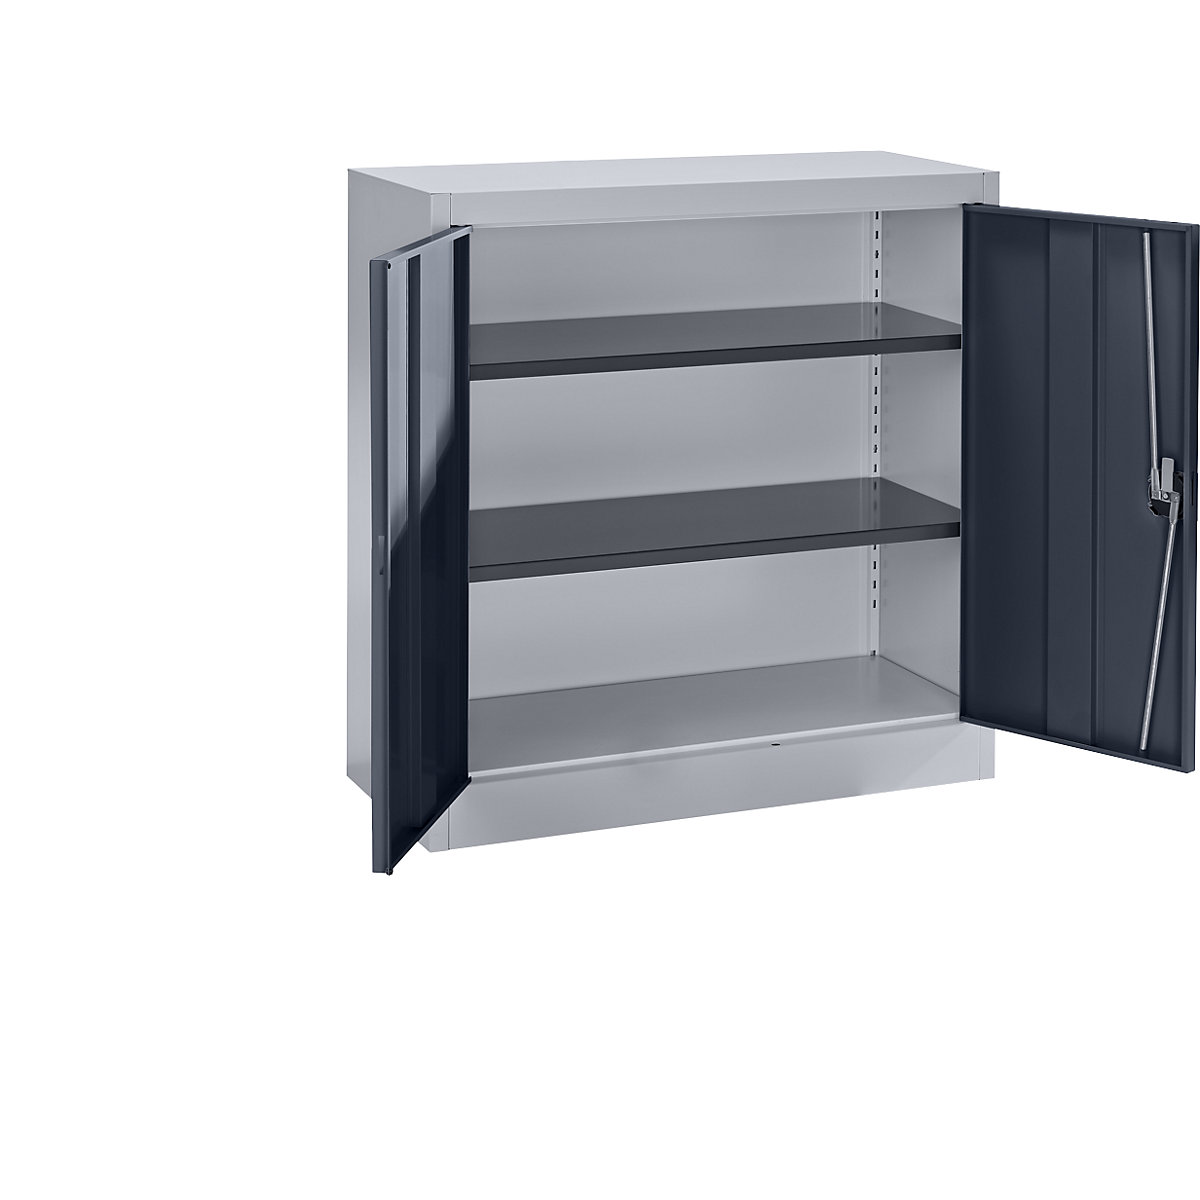 Steel cupboard with hinged doors - mauser